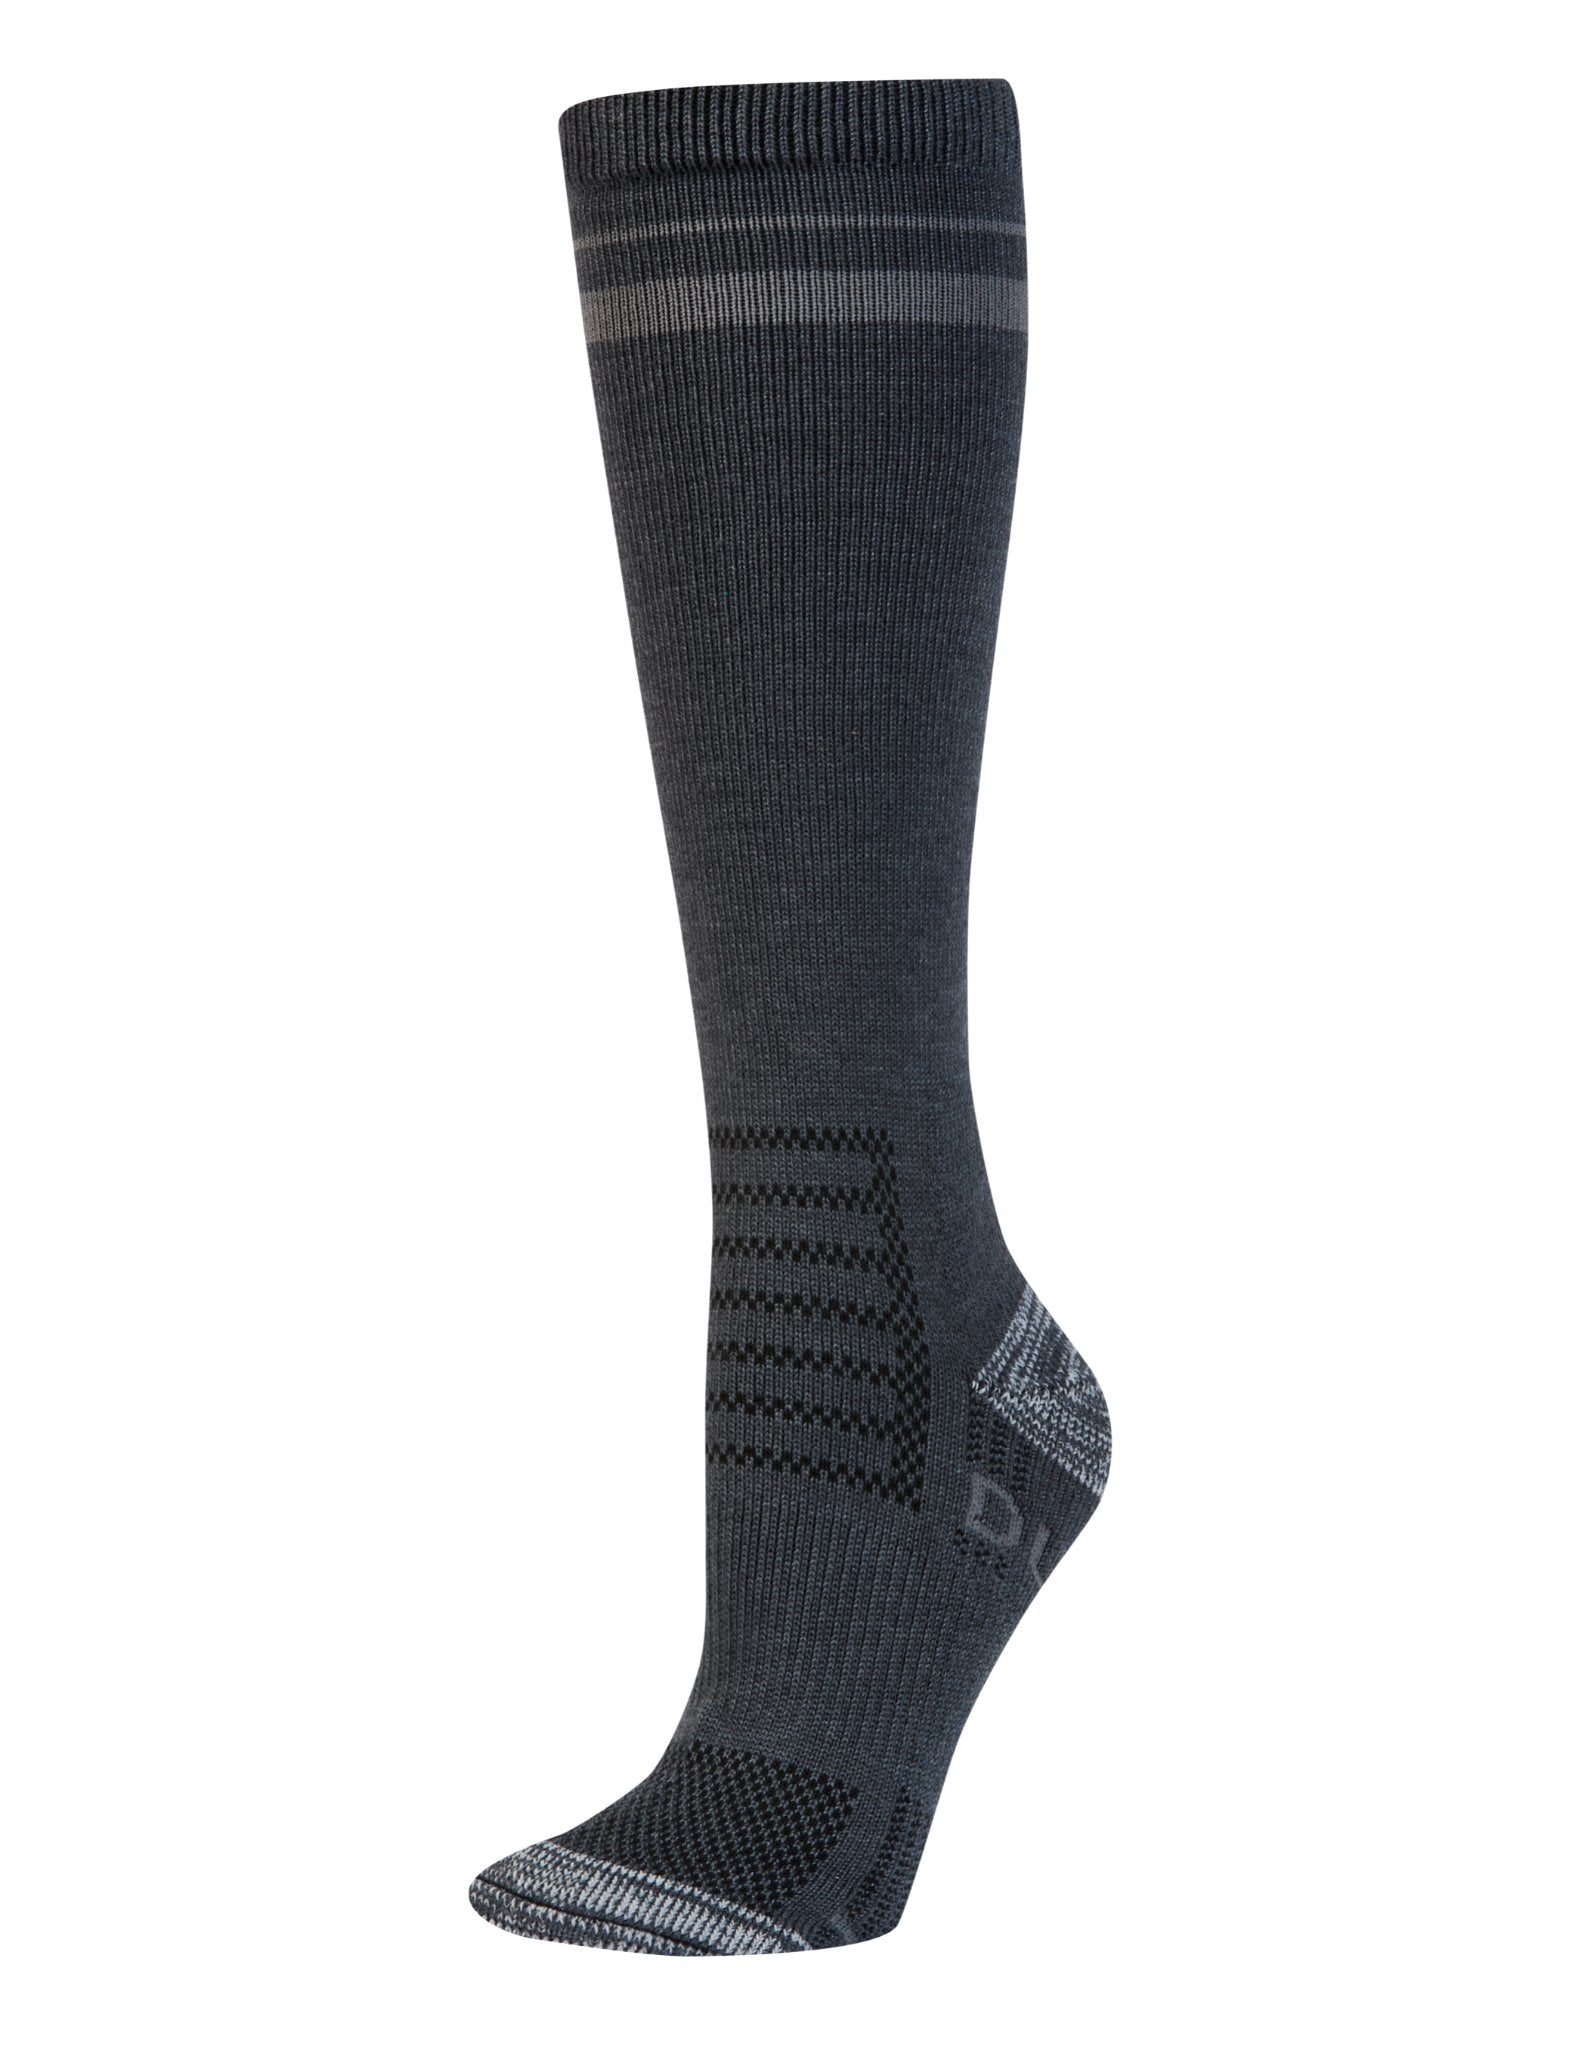 Dublin Technical Socks  - Adults One Size